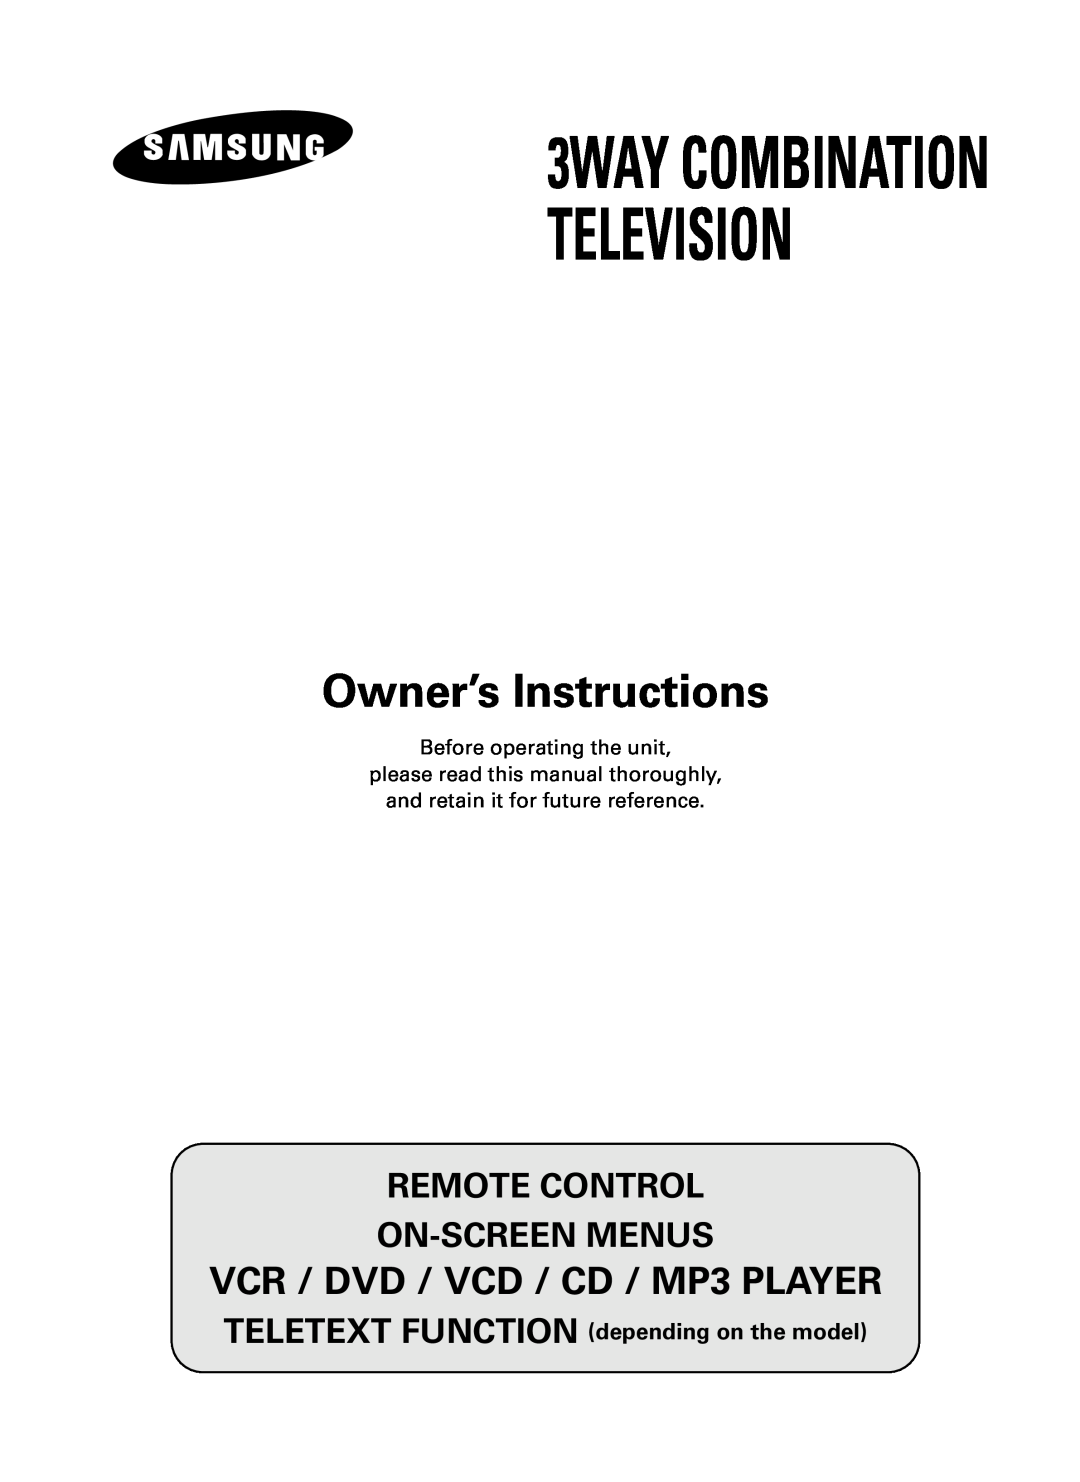 Samsung UW21J10VD5XXEG, UW28J10VD5XXEG manual Remote Control On-Screen Menus, TELETEXT FUNCTION depending on the model 